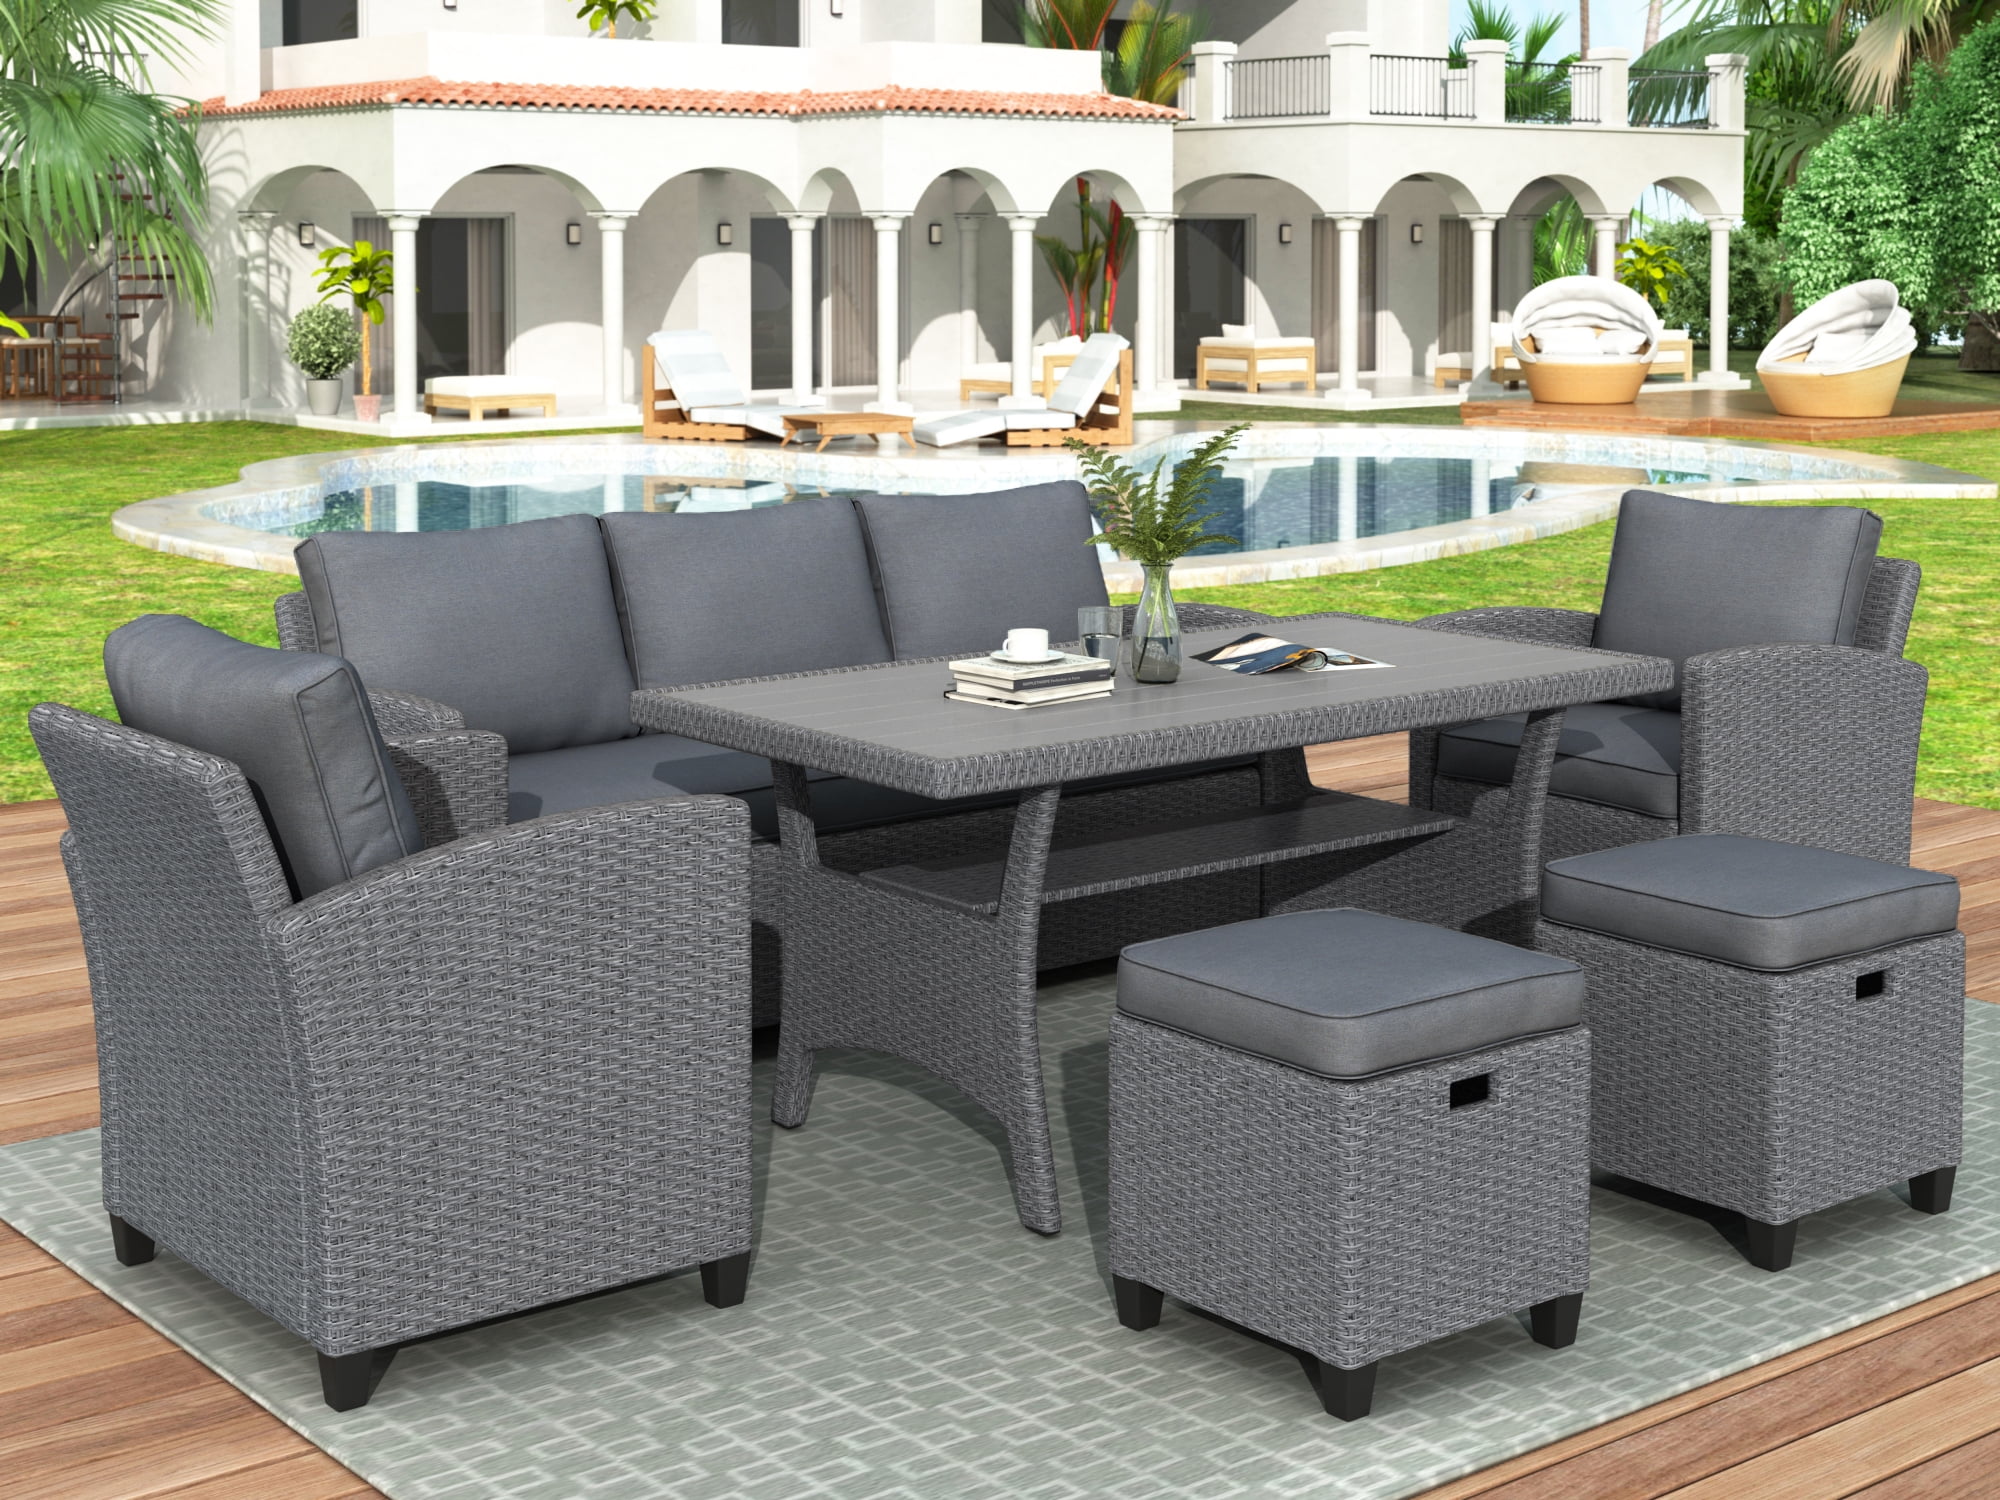 Urhomepro Outdoor Sectional Sofa Sets 6 Piece Patio